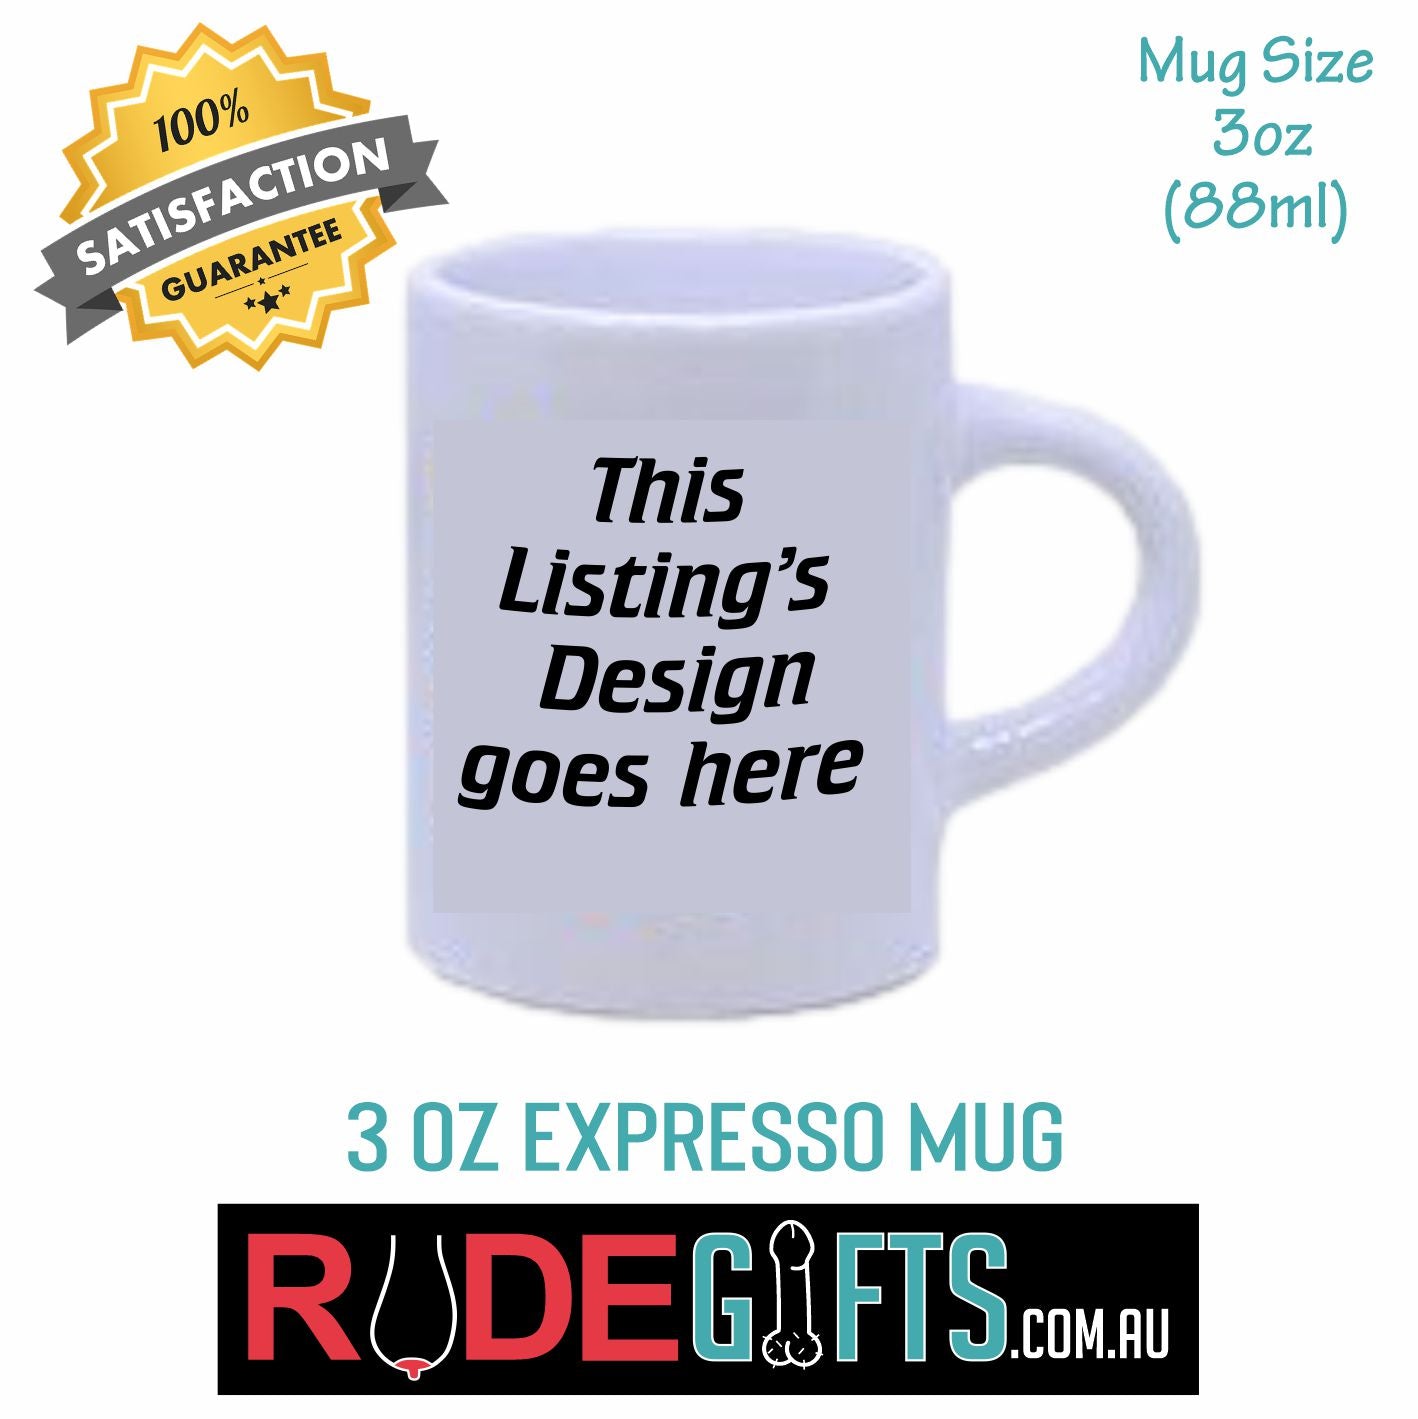 Boss Cunt Coffee Mug